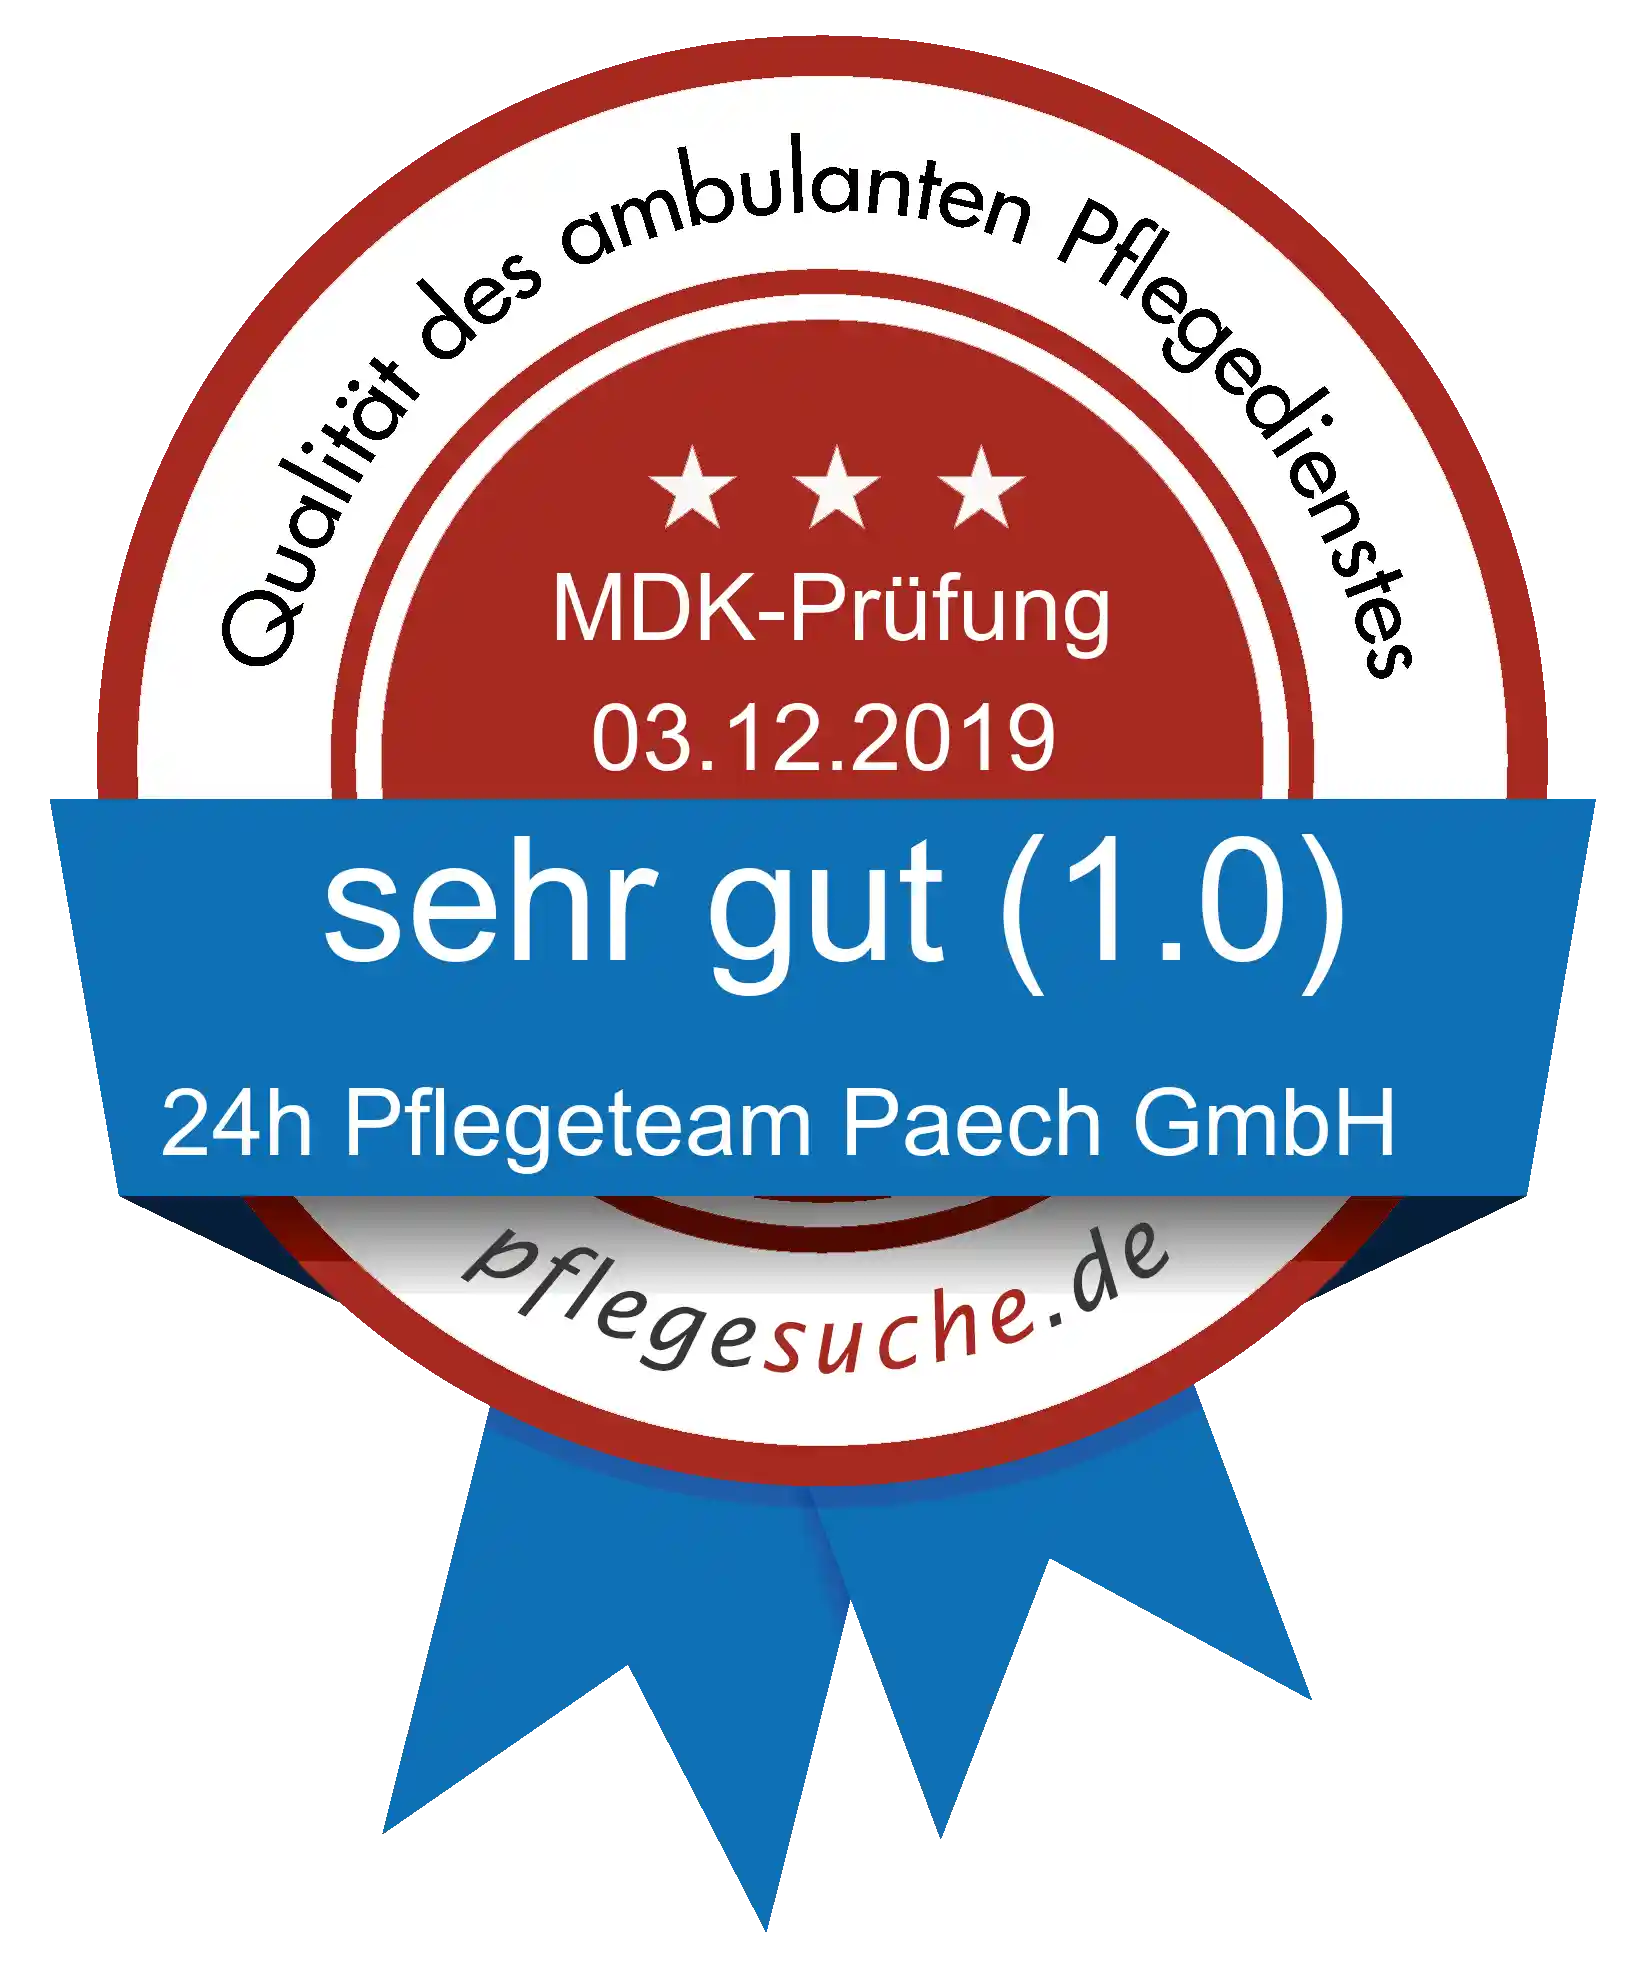 Siegel Benotung: 24h Pflegeteam Paech GmbH